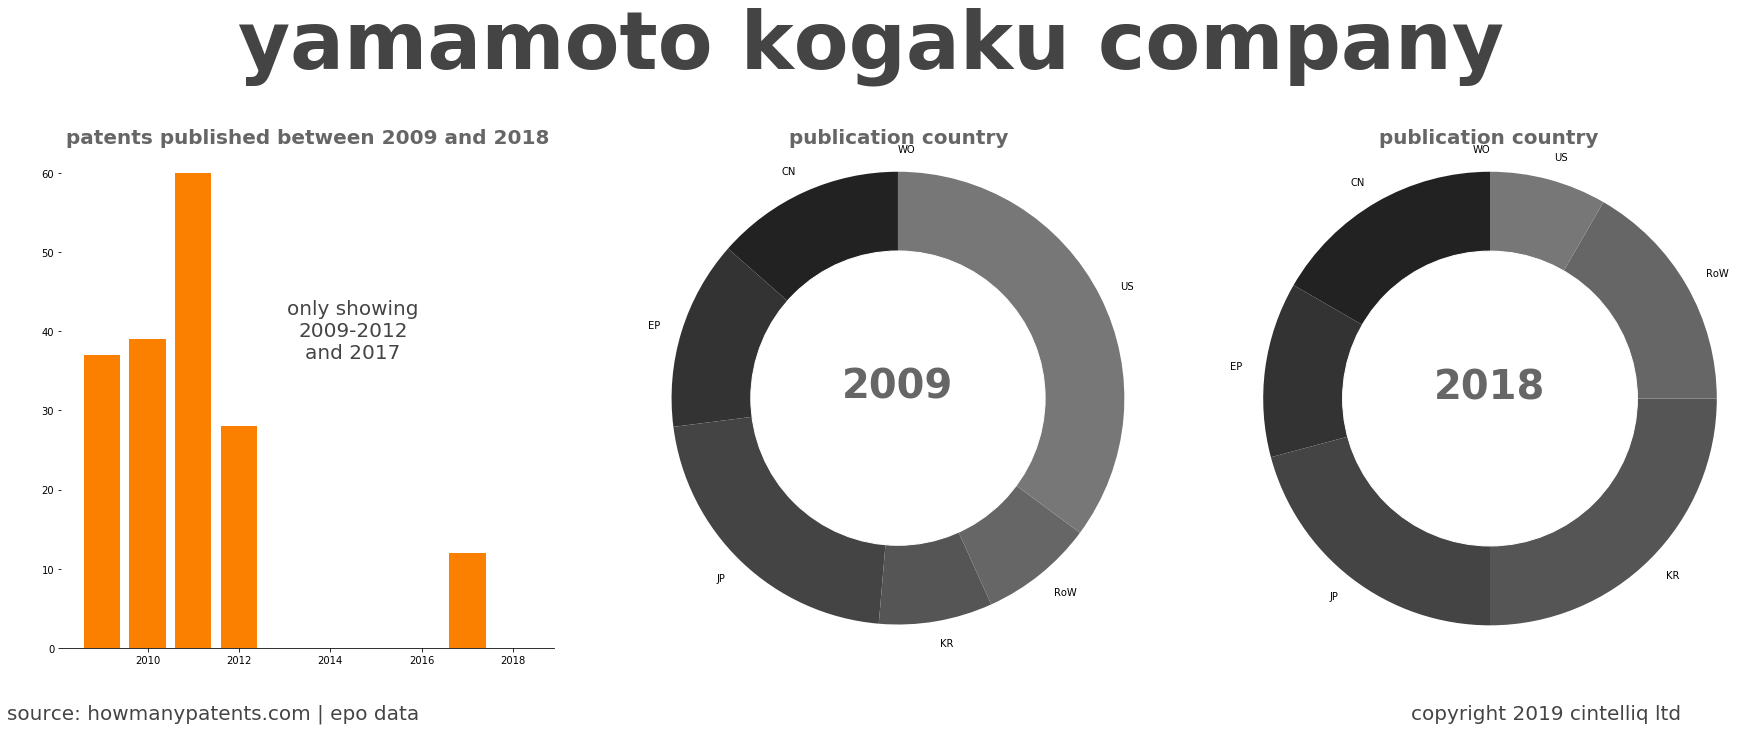 summary of patents for Yamamoto Kogaku Company